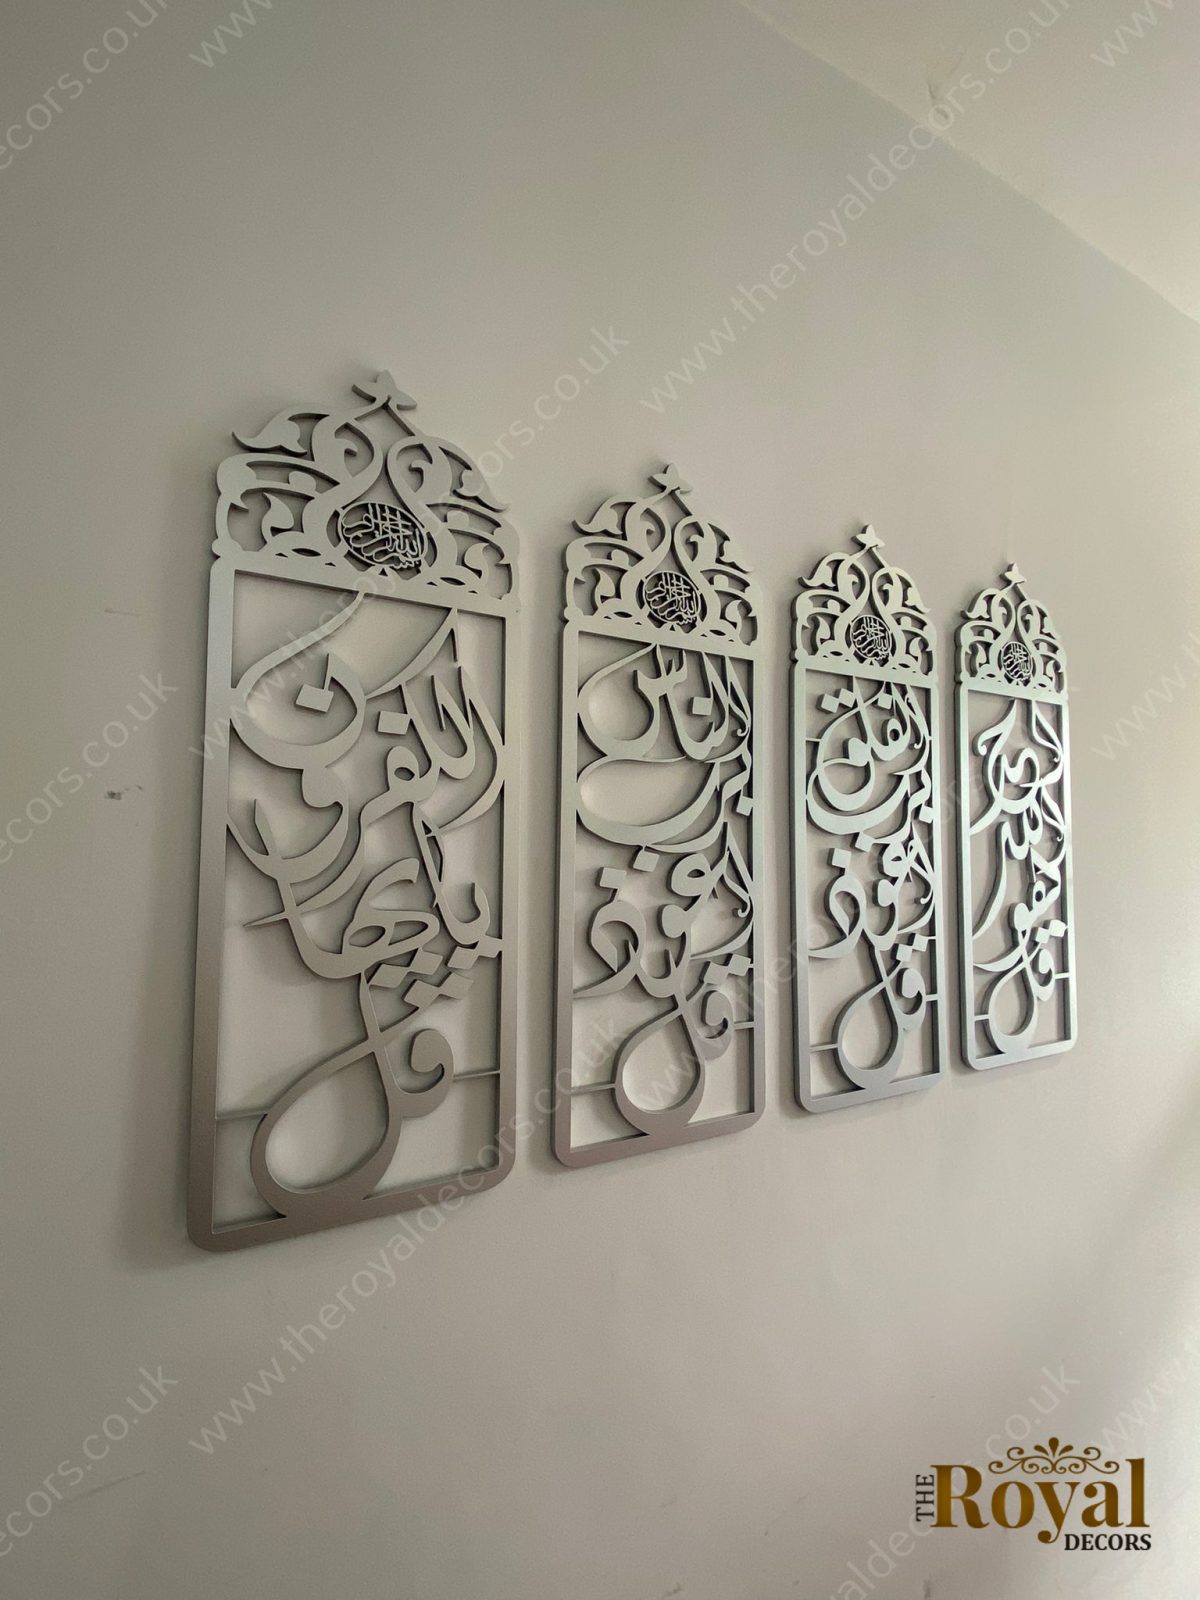 3D 4 Quls Islamic Wall Art Arabic Calligraphy home decor rectangular shape 22.04.22